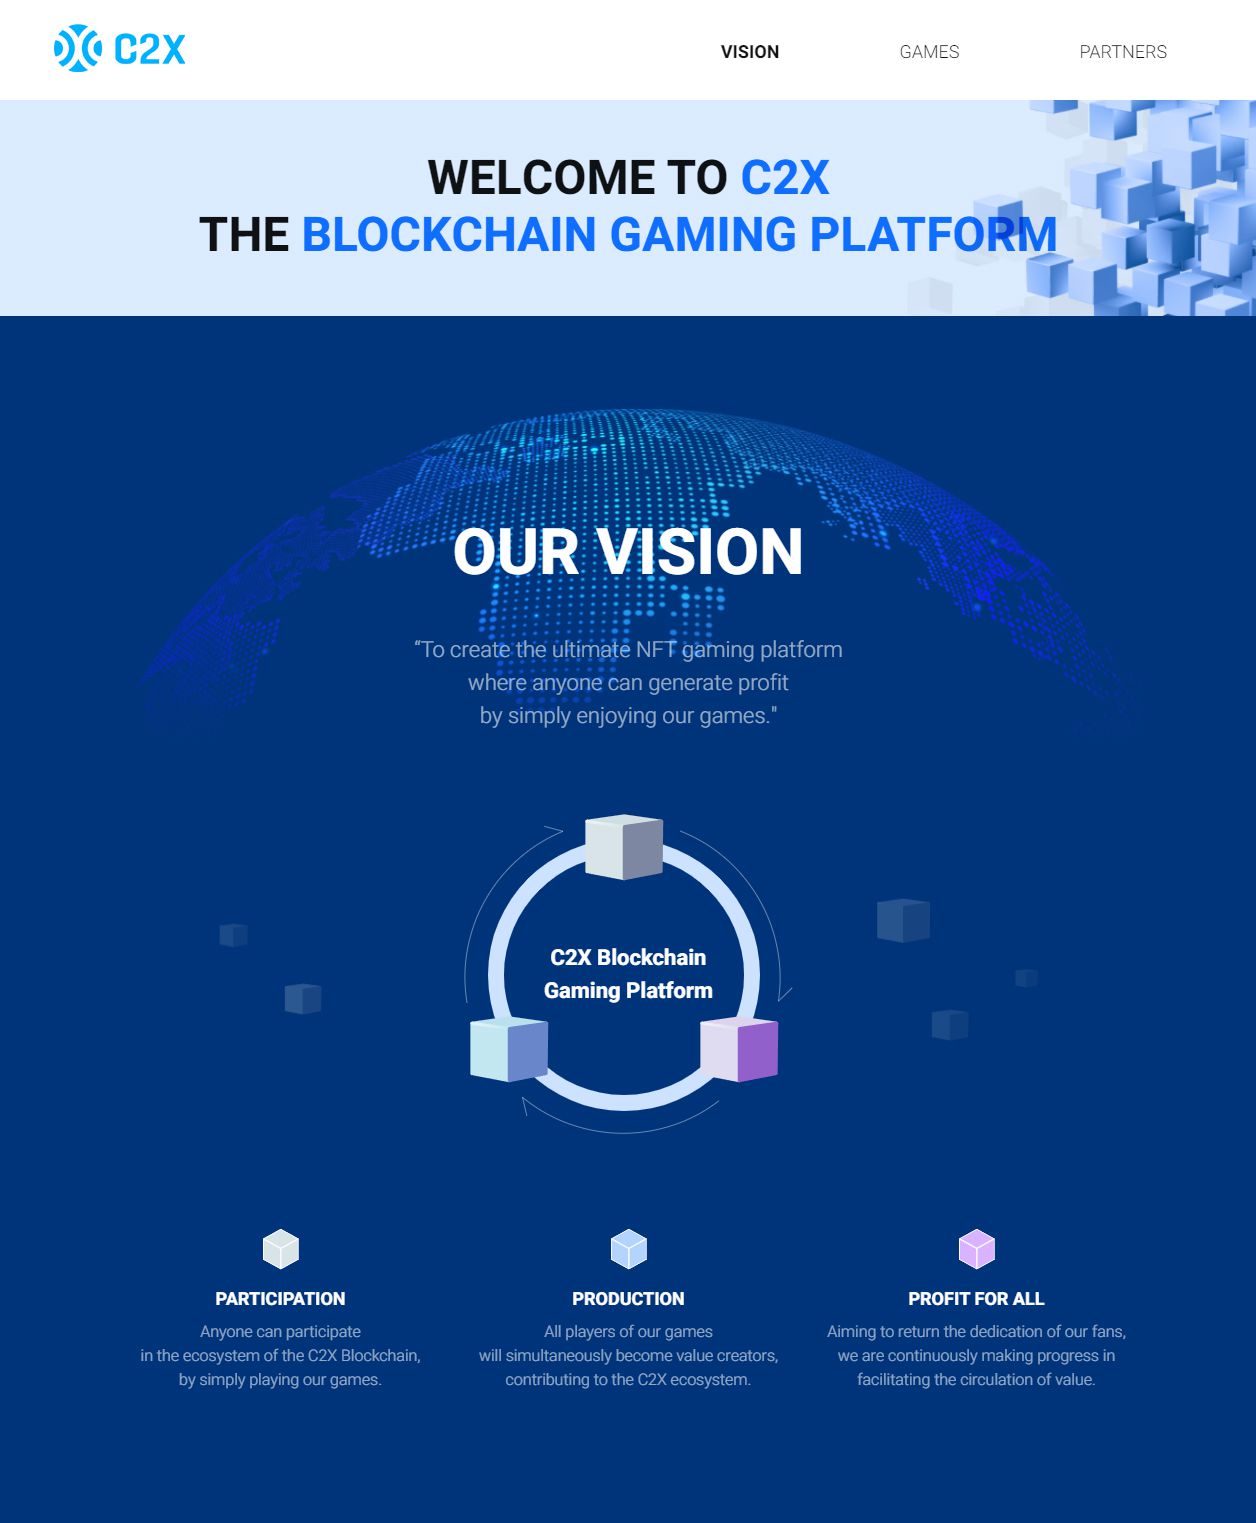 Com2uS Group積極布局  C2X區塊鏈遊戲平台正式上線